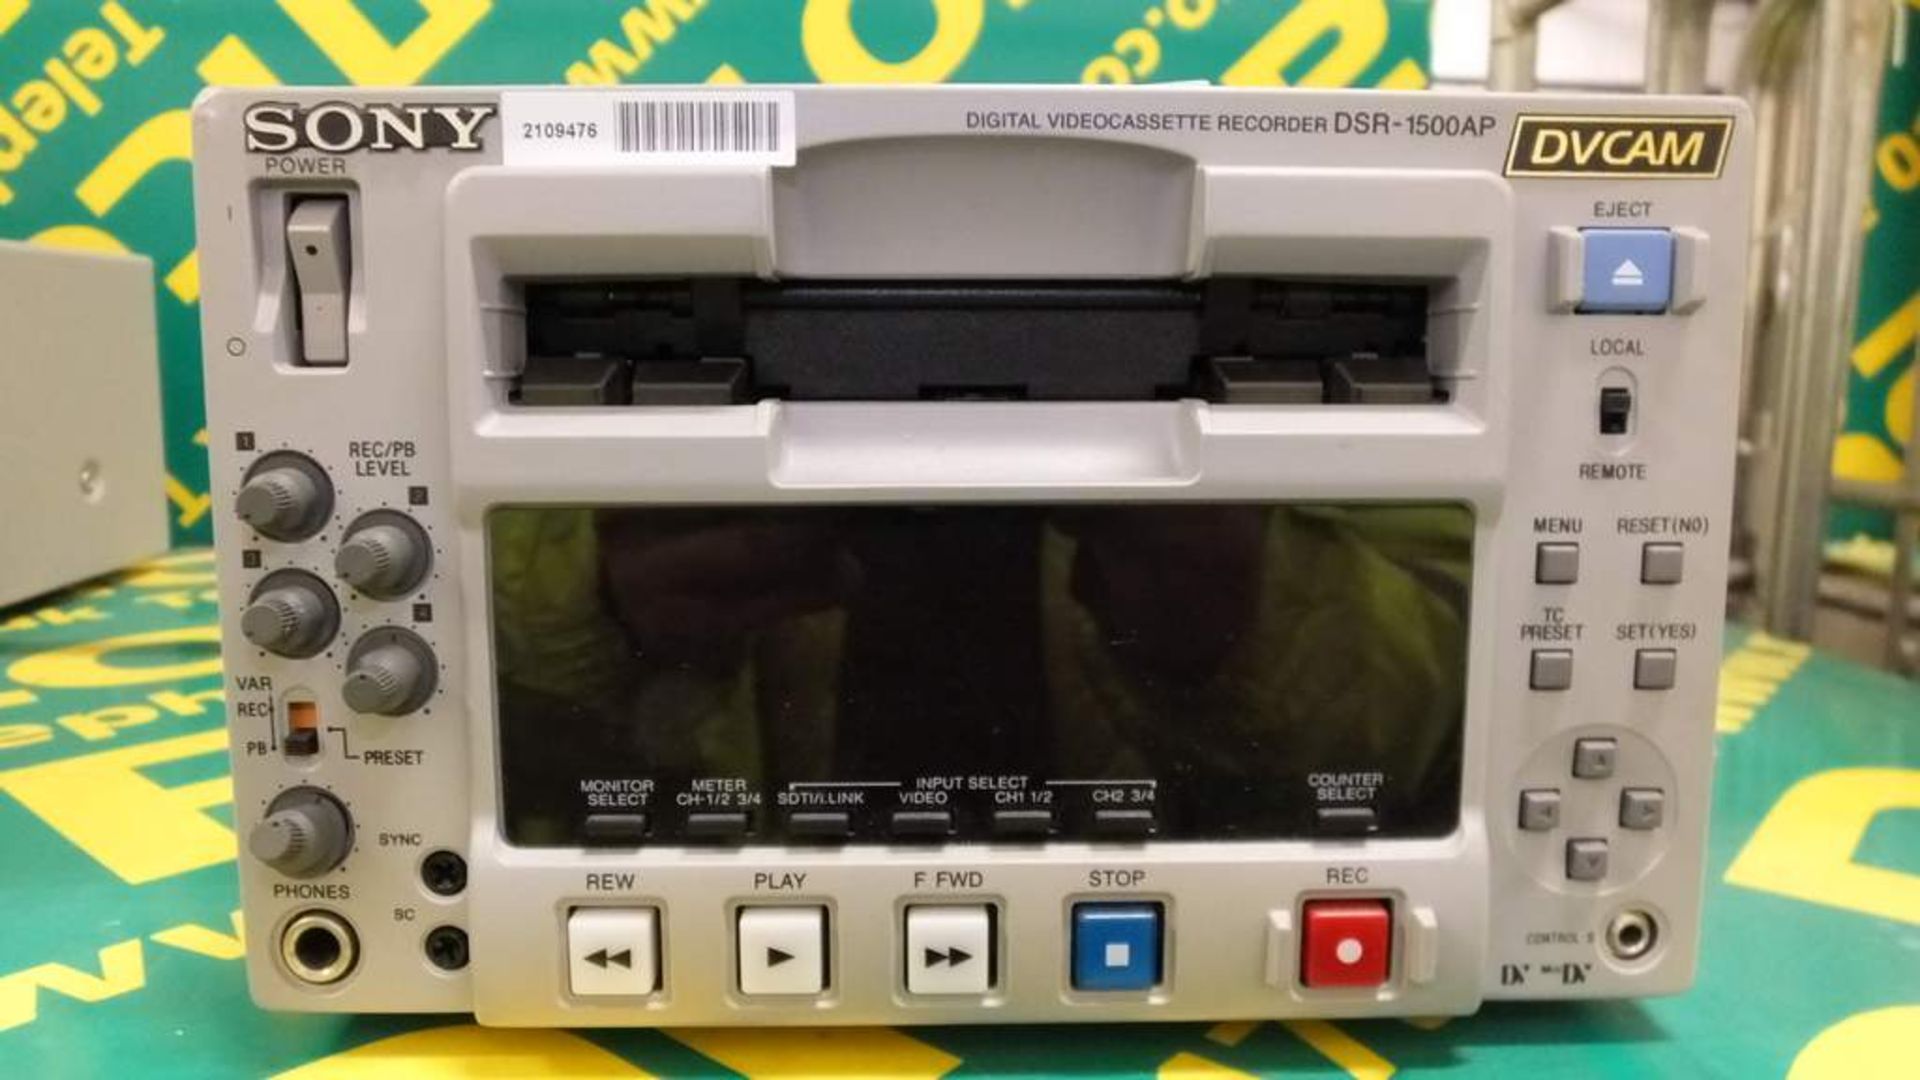 Sony digital videocassette recorder DSR-1500AP - Image 2 of 3